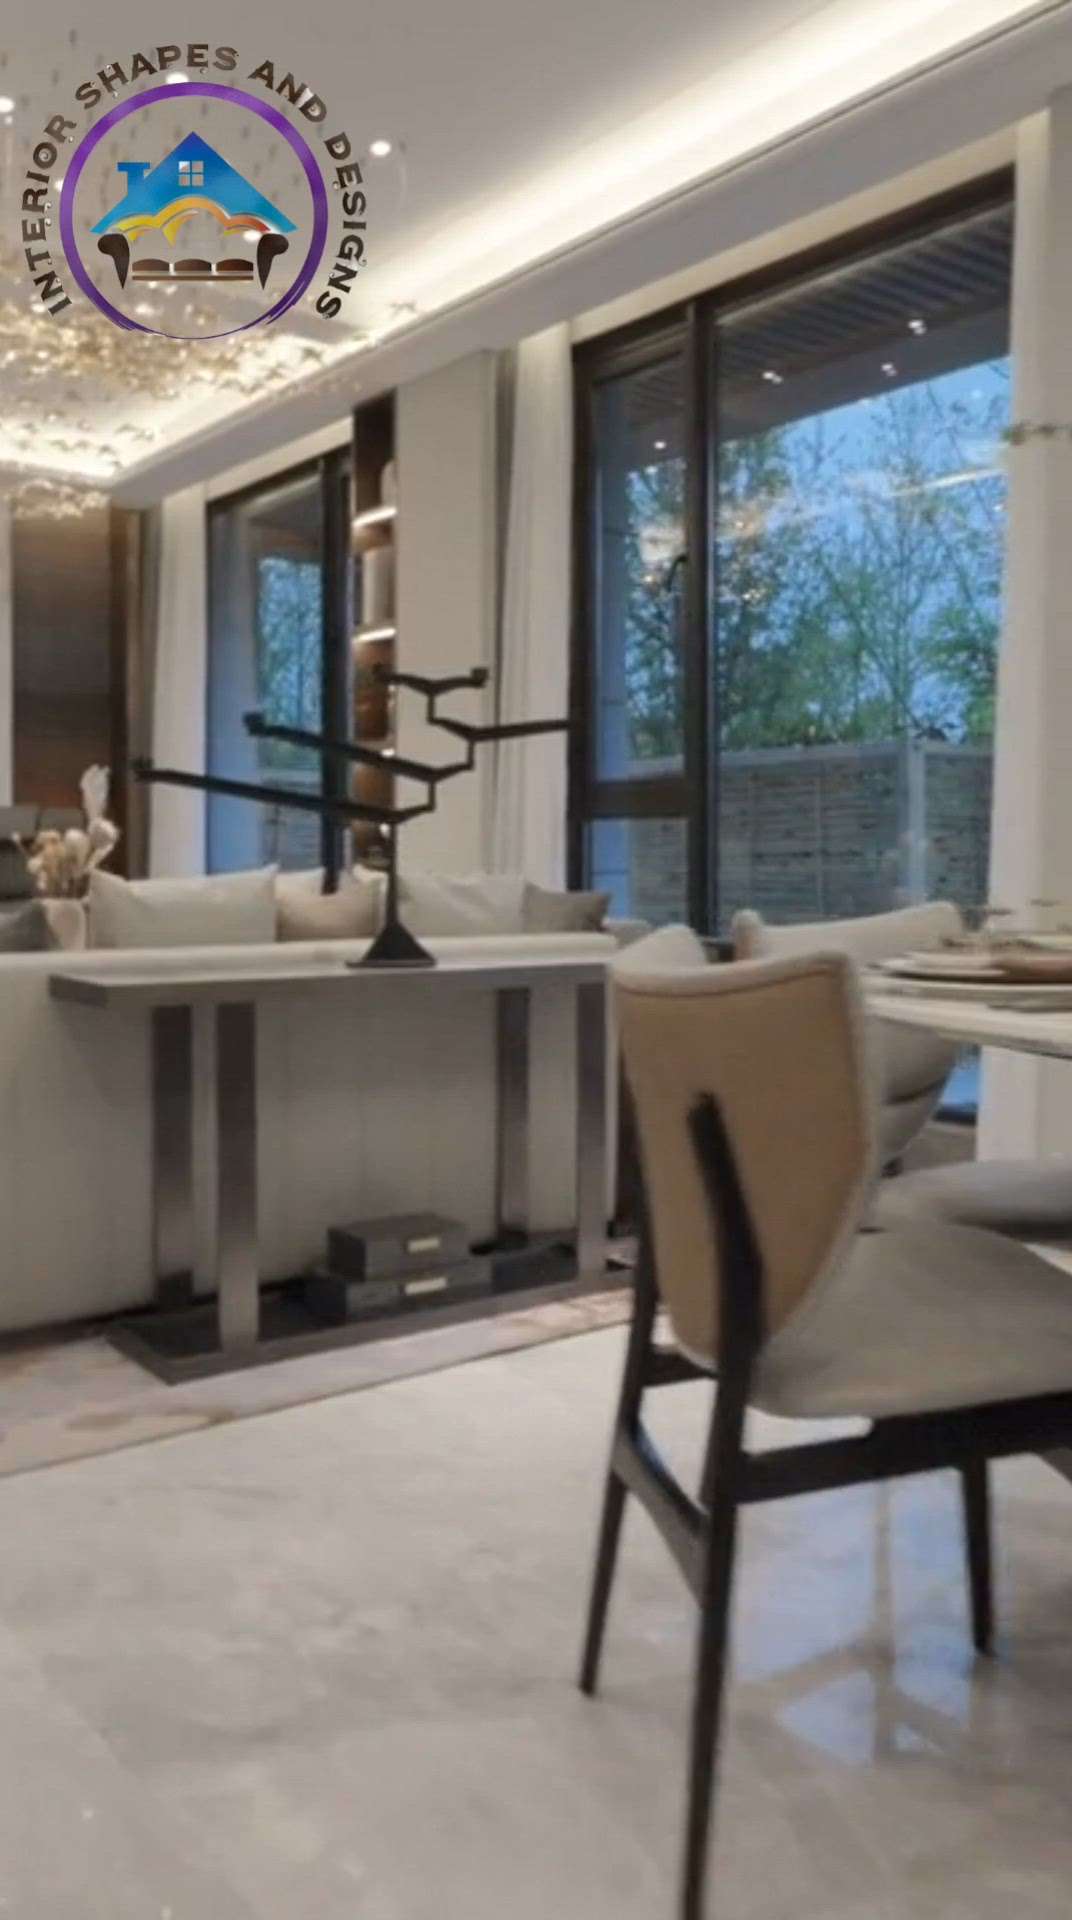 Step into a realm of decadence and refinement with luxury interior designs that redefine elegance. #InteriorDesigner #Architectural&Interior #KitchenInterior #LUXURY_INTERIOR #furniture  #FalseCeiling #BedroomDecor #MasterBedroom #BedroomIdeas #BedroomDesigns #masterbedroomdesinger #MasterBedroom #LivingroomDesigns #LivingRoomTable #LivingRoomSofa #DiningChairs #diningroomdecor #FlooringTiles #FlooringSolutions #BathroomStorage #BathroomRenovation #BathroomCabinet